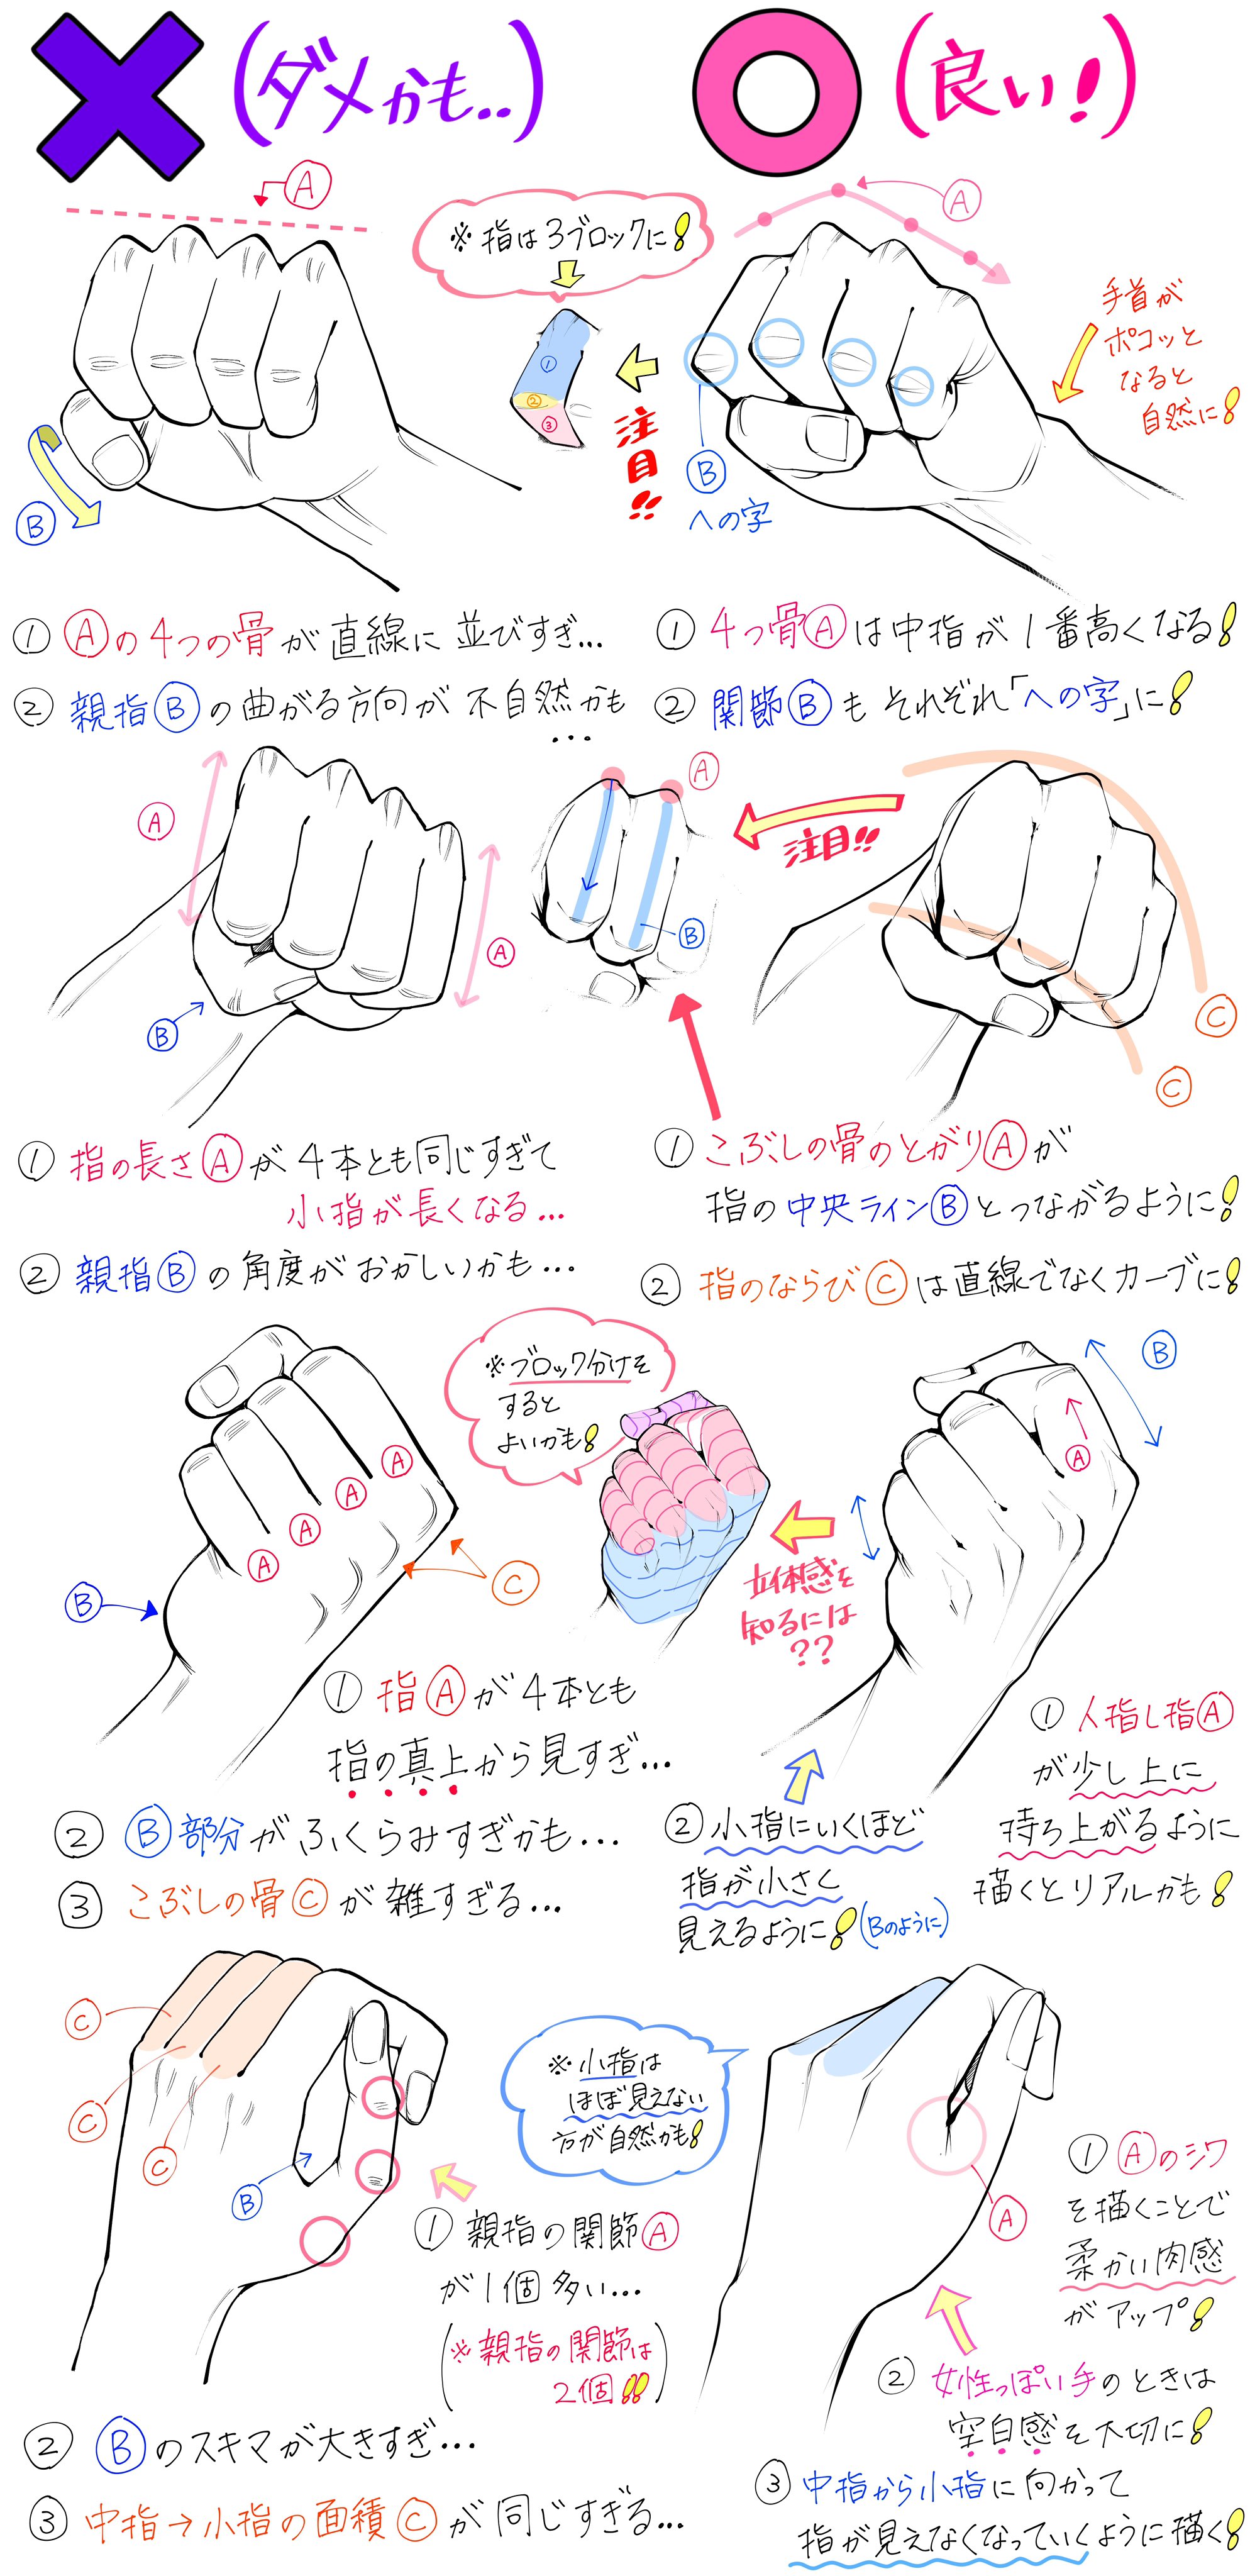 Twitter 上的 吉村拓也 イラスト講座 手のデッサン練習をしまくりたいときの 手の描き方の 図解まとめ T Co Fb9gbyi7tu Twitter